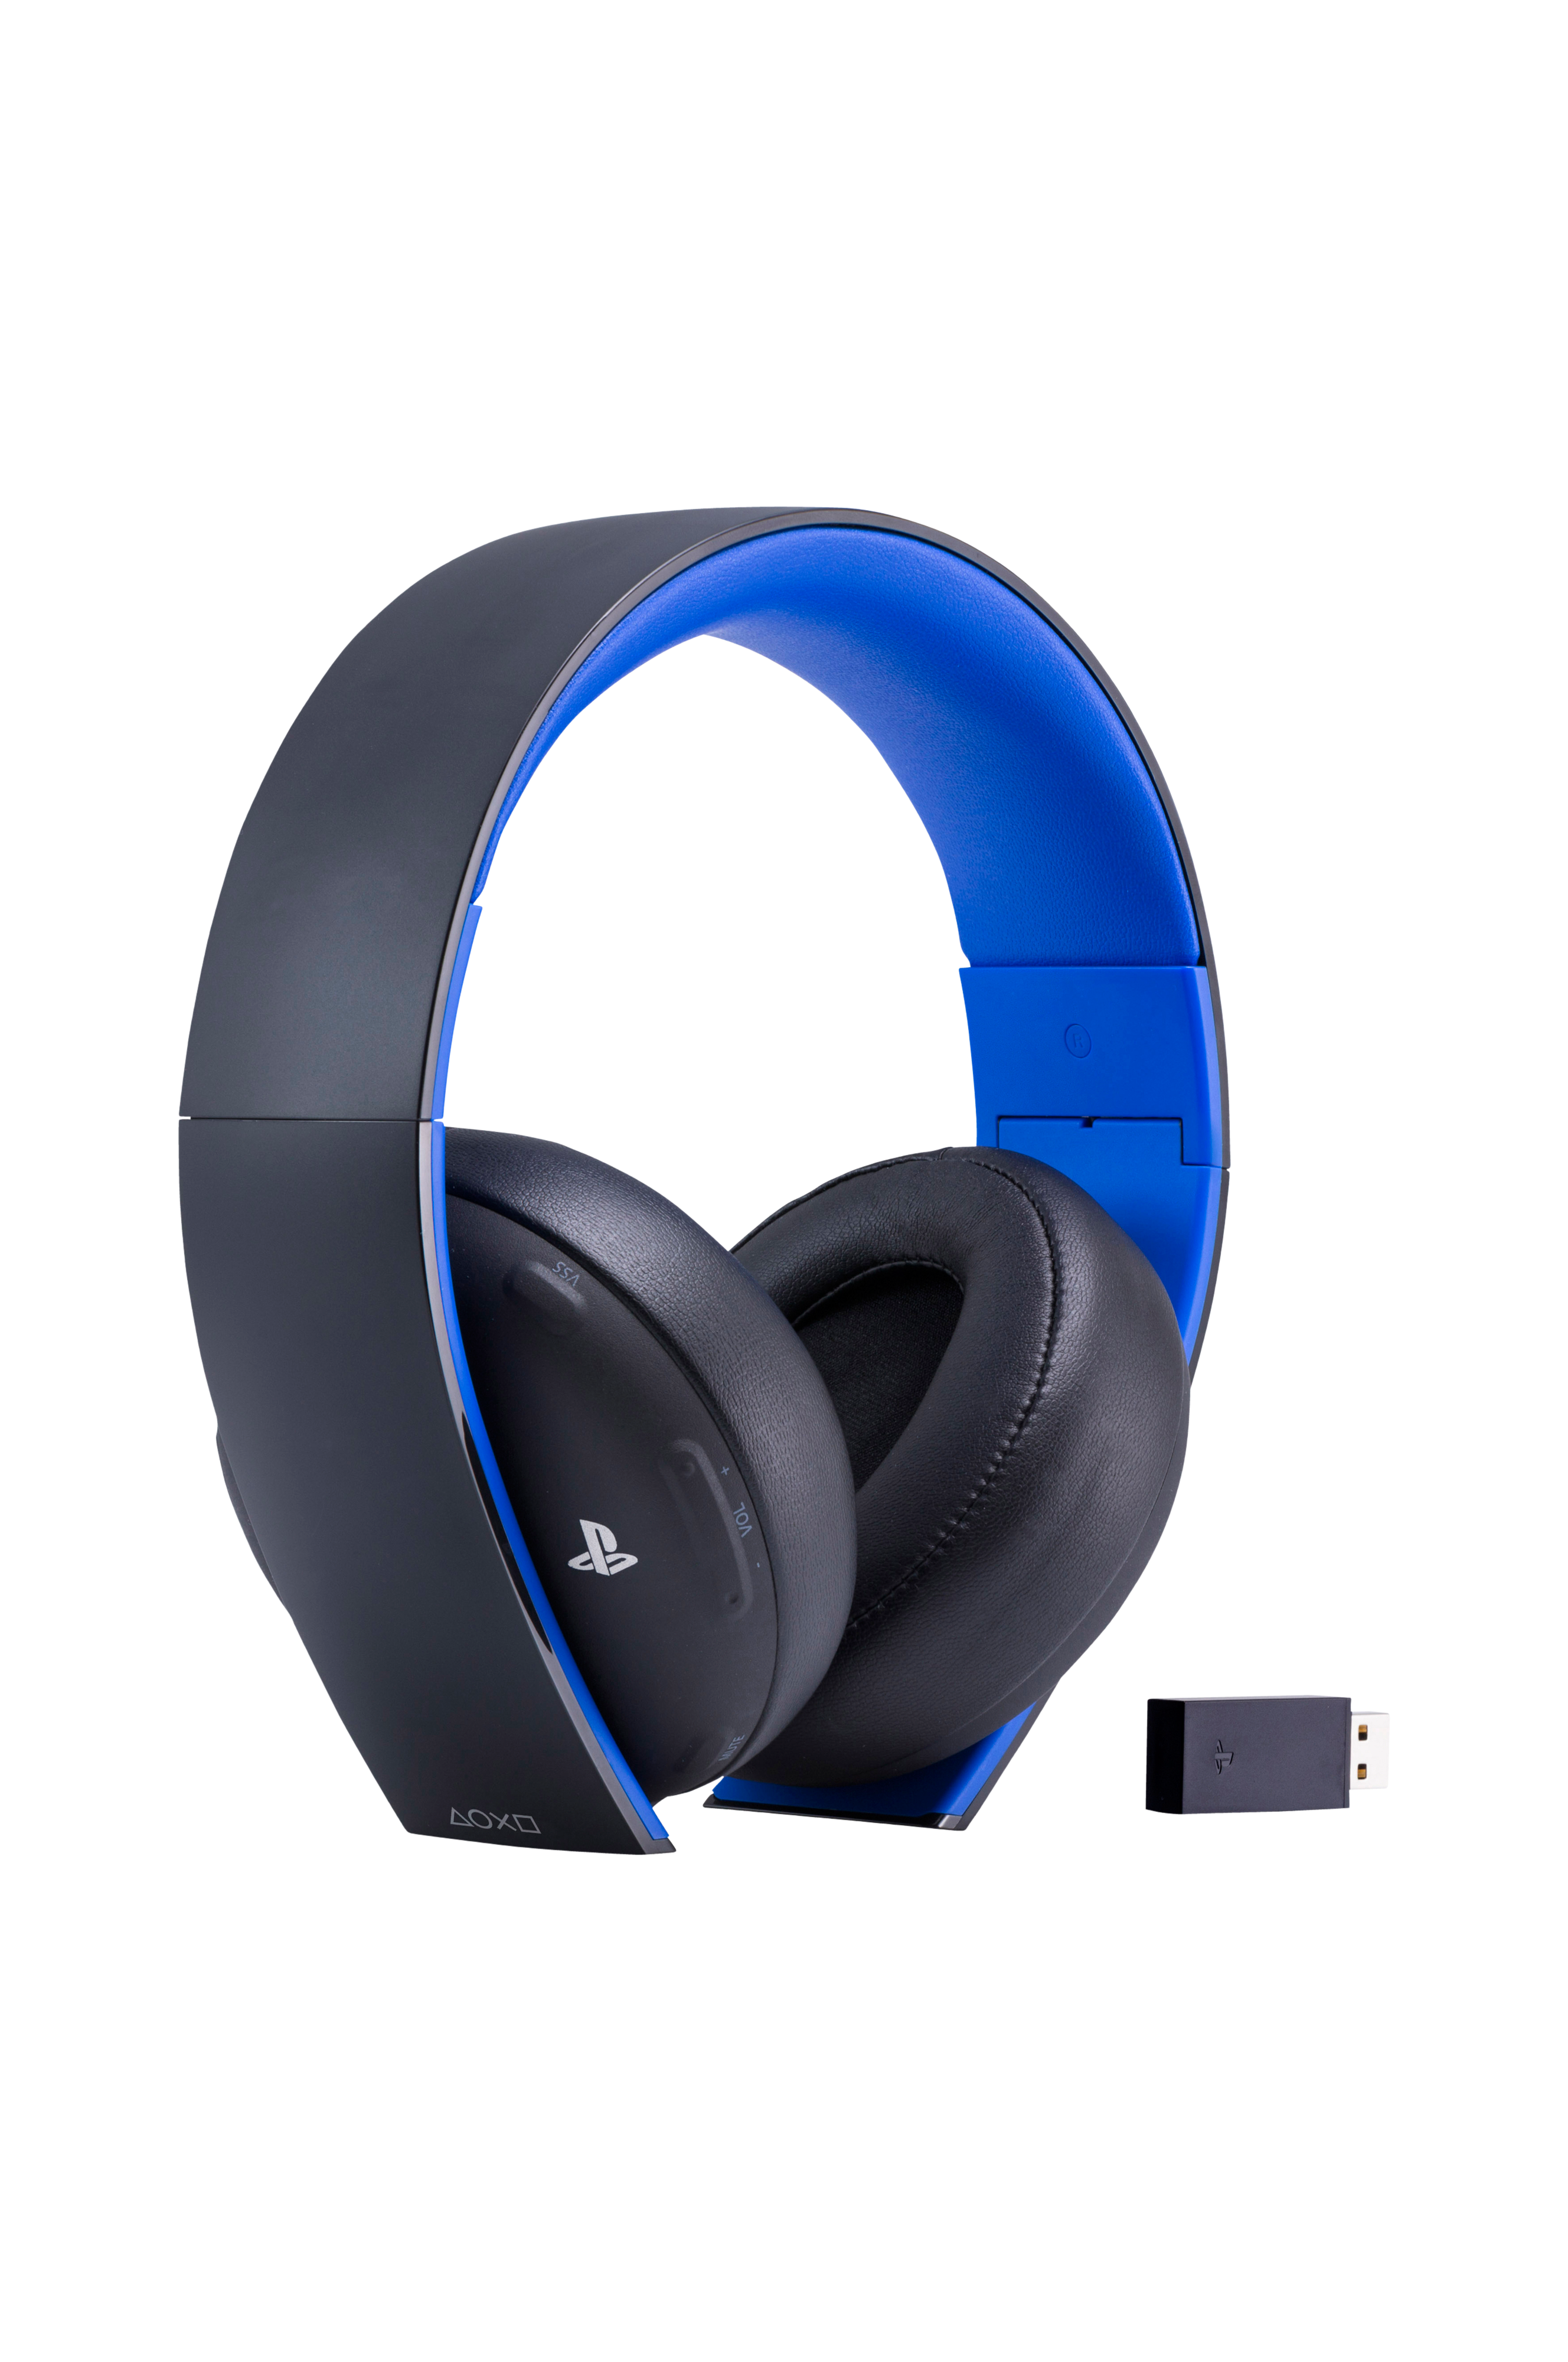 Sony Wireless stereo Headset Headset 3. Sony Pulse Wireless stereo Headset Elite Edition. Наушники Wireless stereo Headset ps4. Wireless stereo Headset 2.0 ps4.